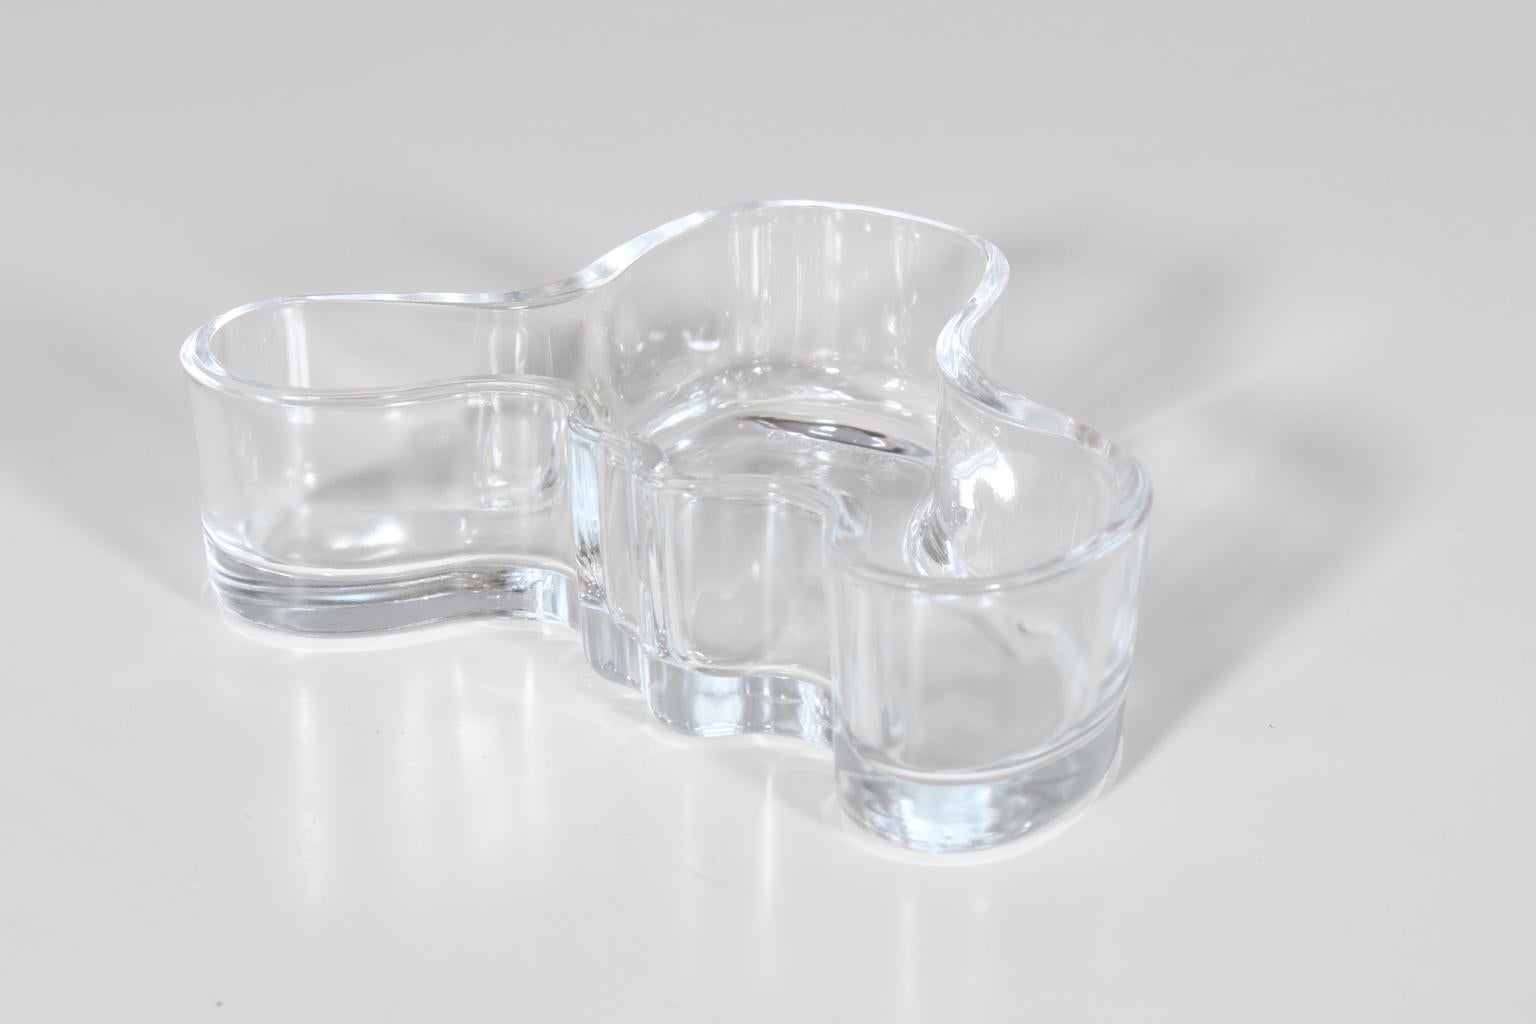 Alvar Aalto Glass Savoy Vase and Bowls For Sale 1